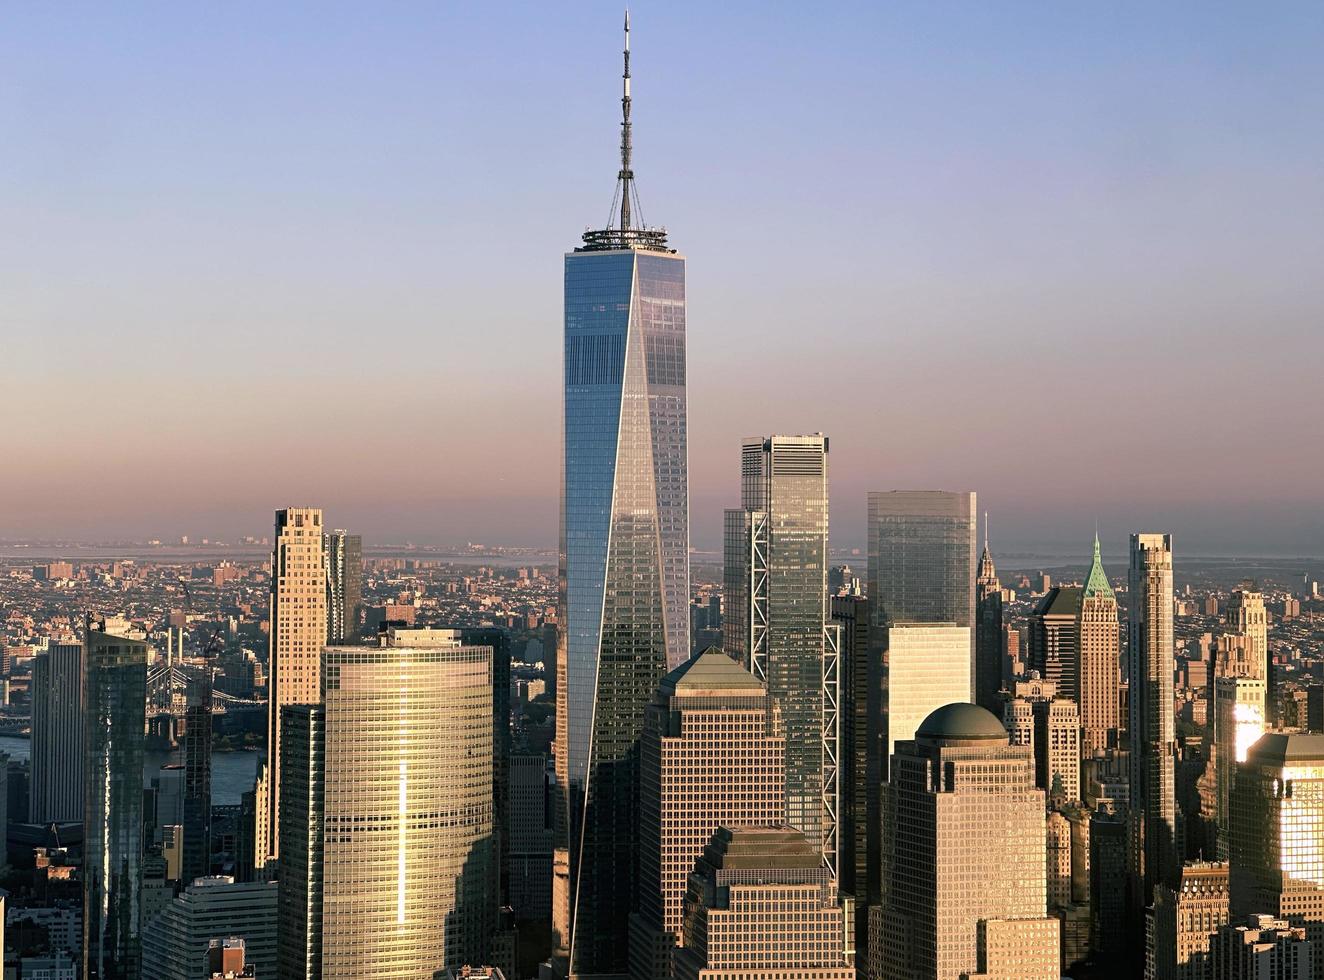 NYC, 2022 - One World Trade Center photo